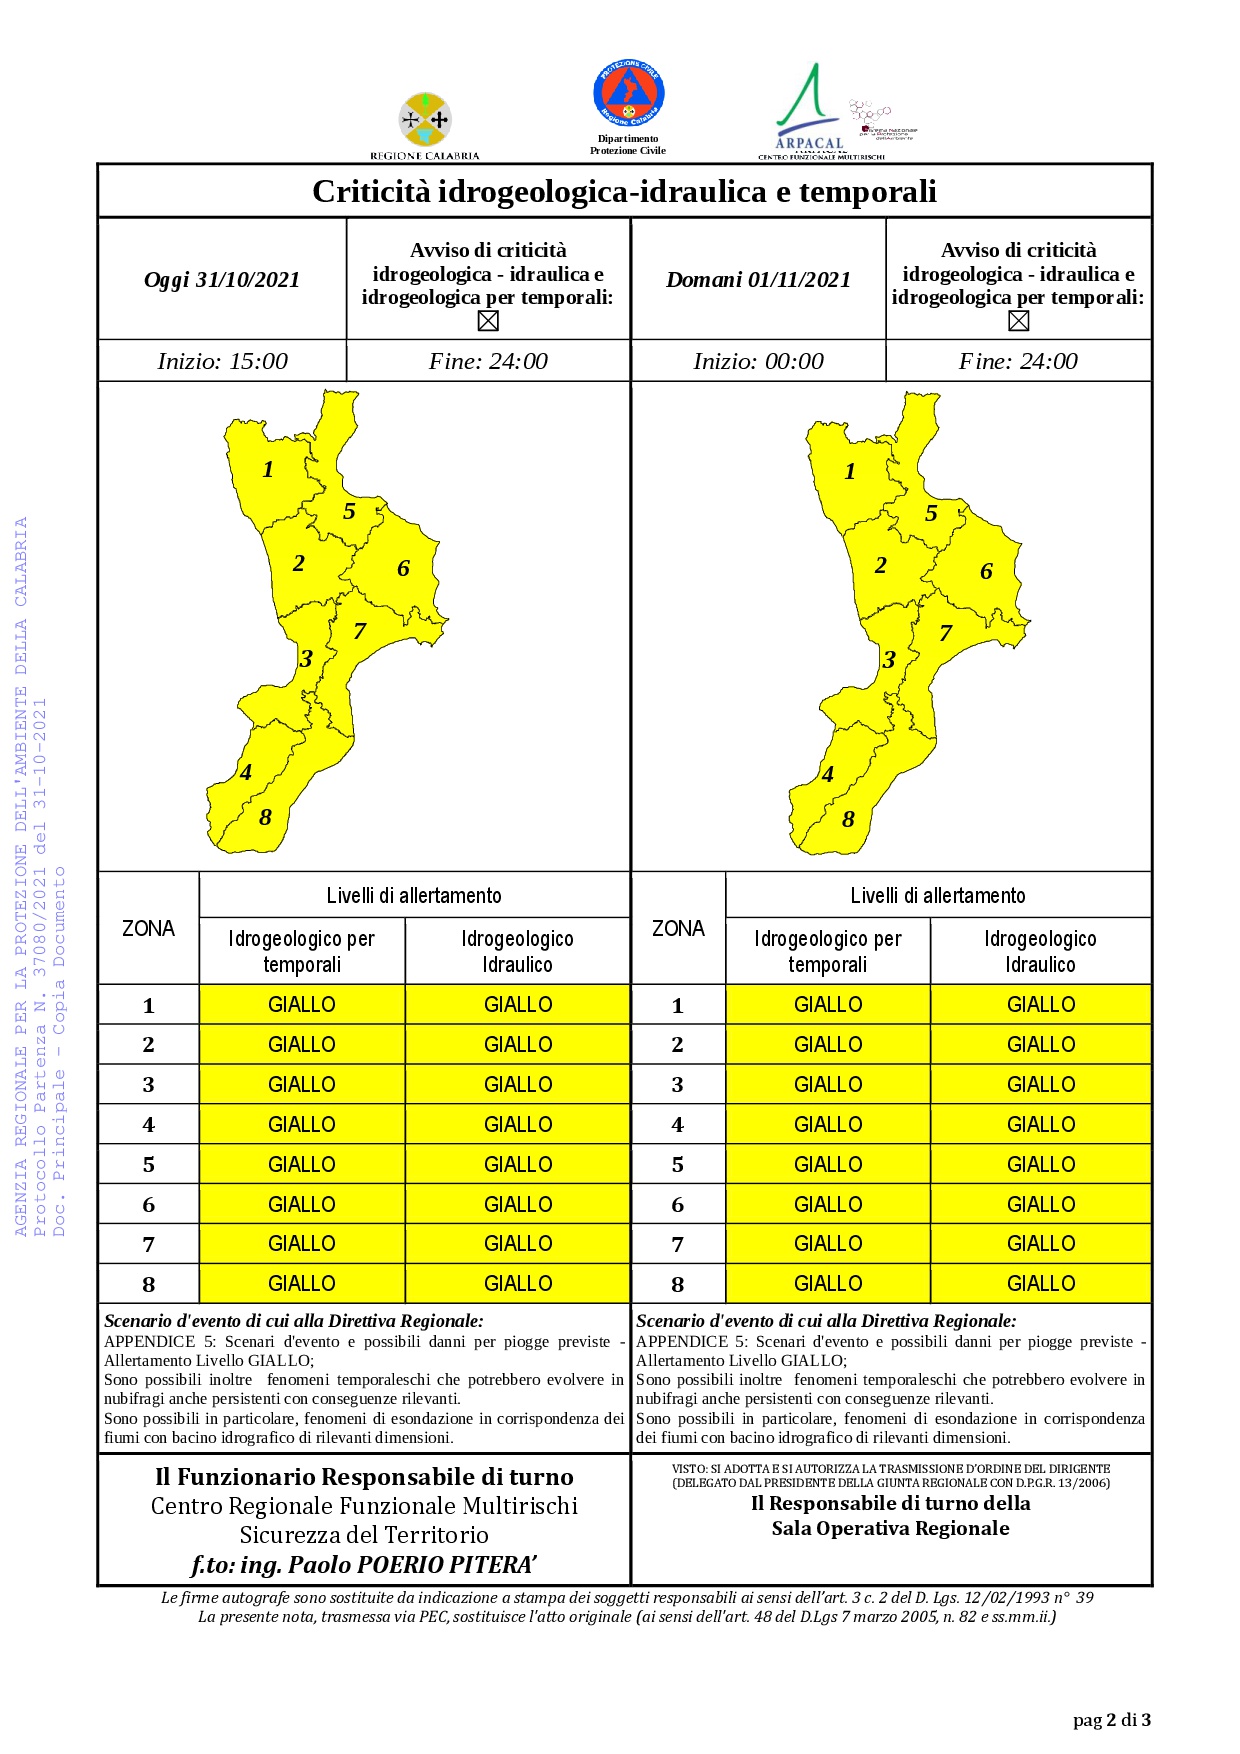 Criticità idrogeologica-idraulica e temporali in Calabria 31-10-2021